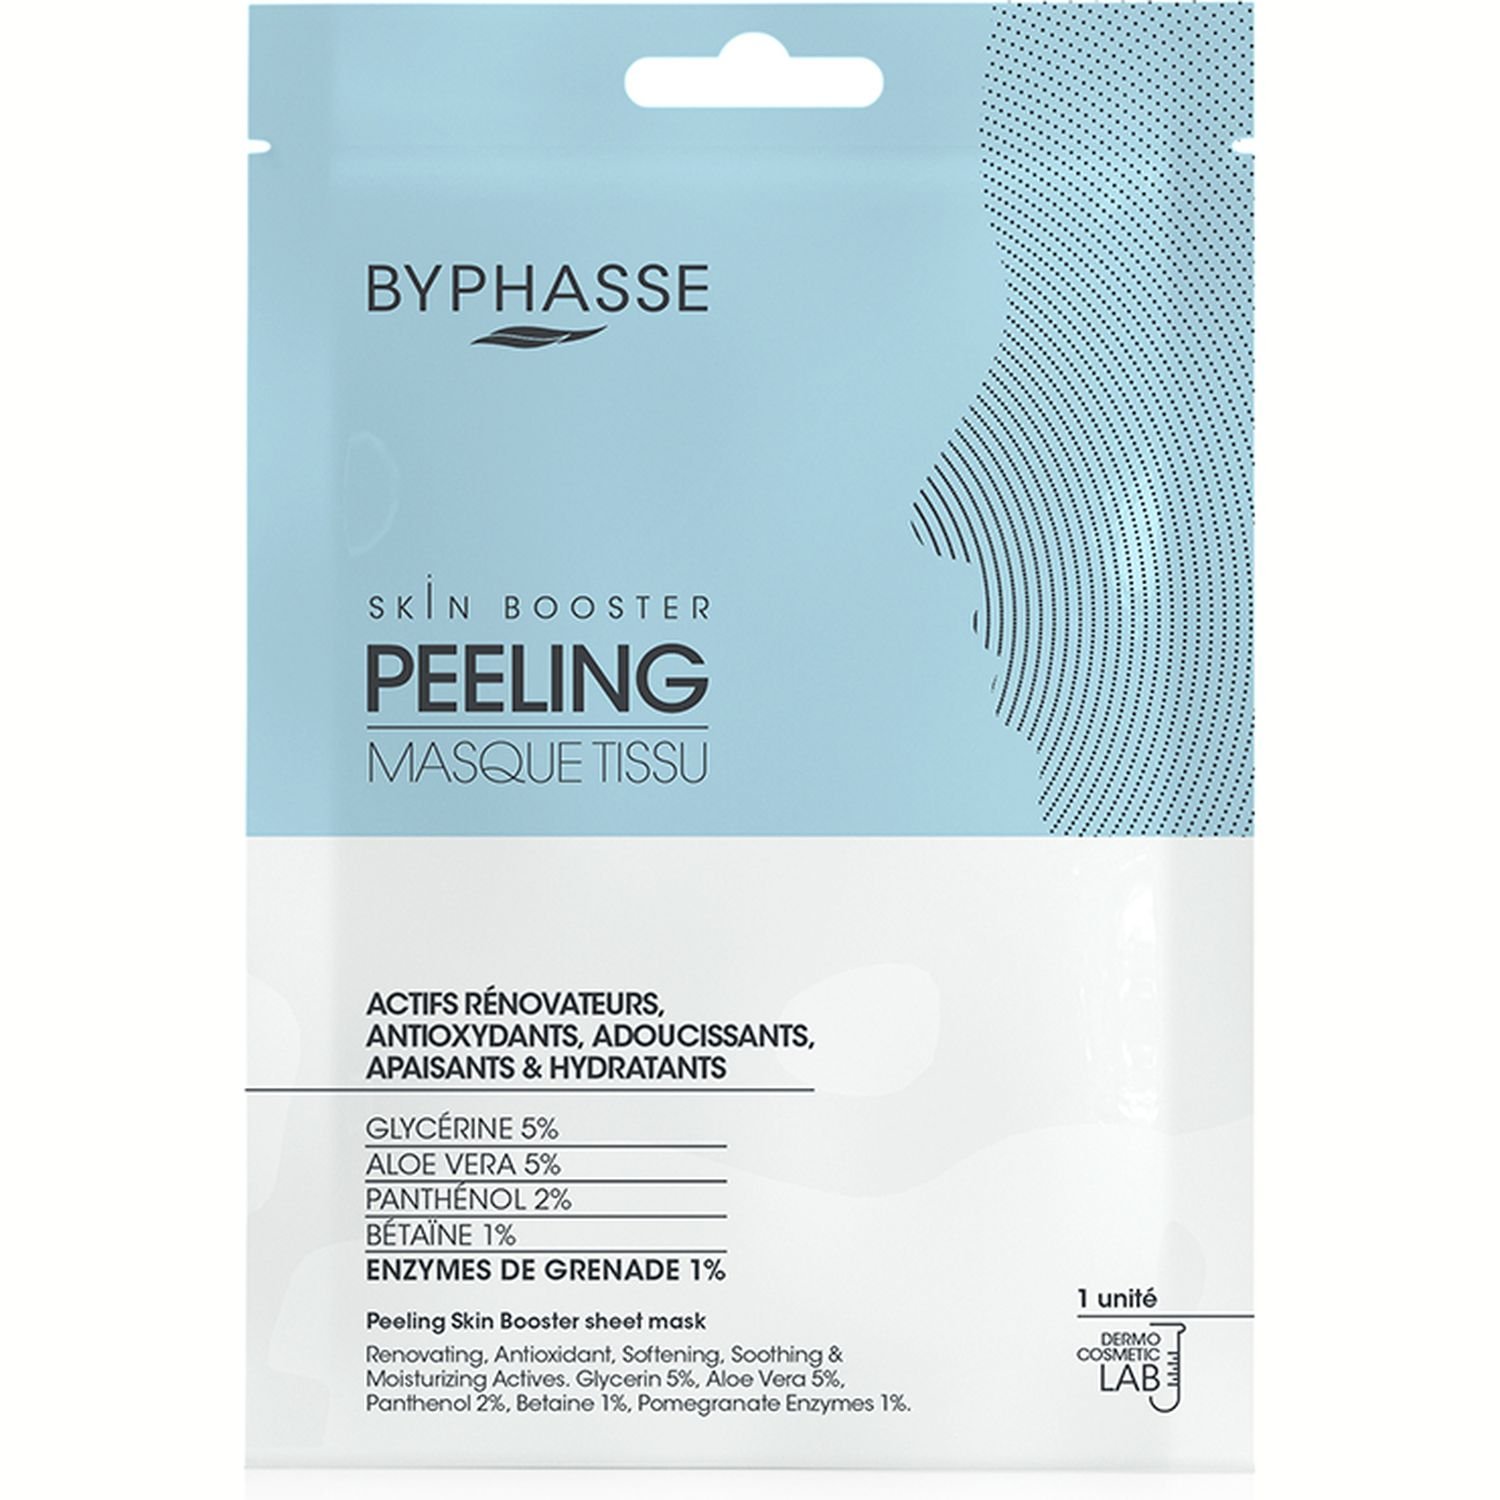 Тканевая маска-бустер для лица Byphasse для пилинга, 18 мл - фото 1